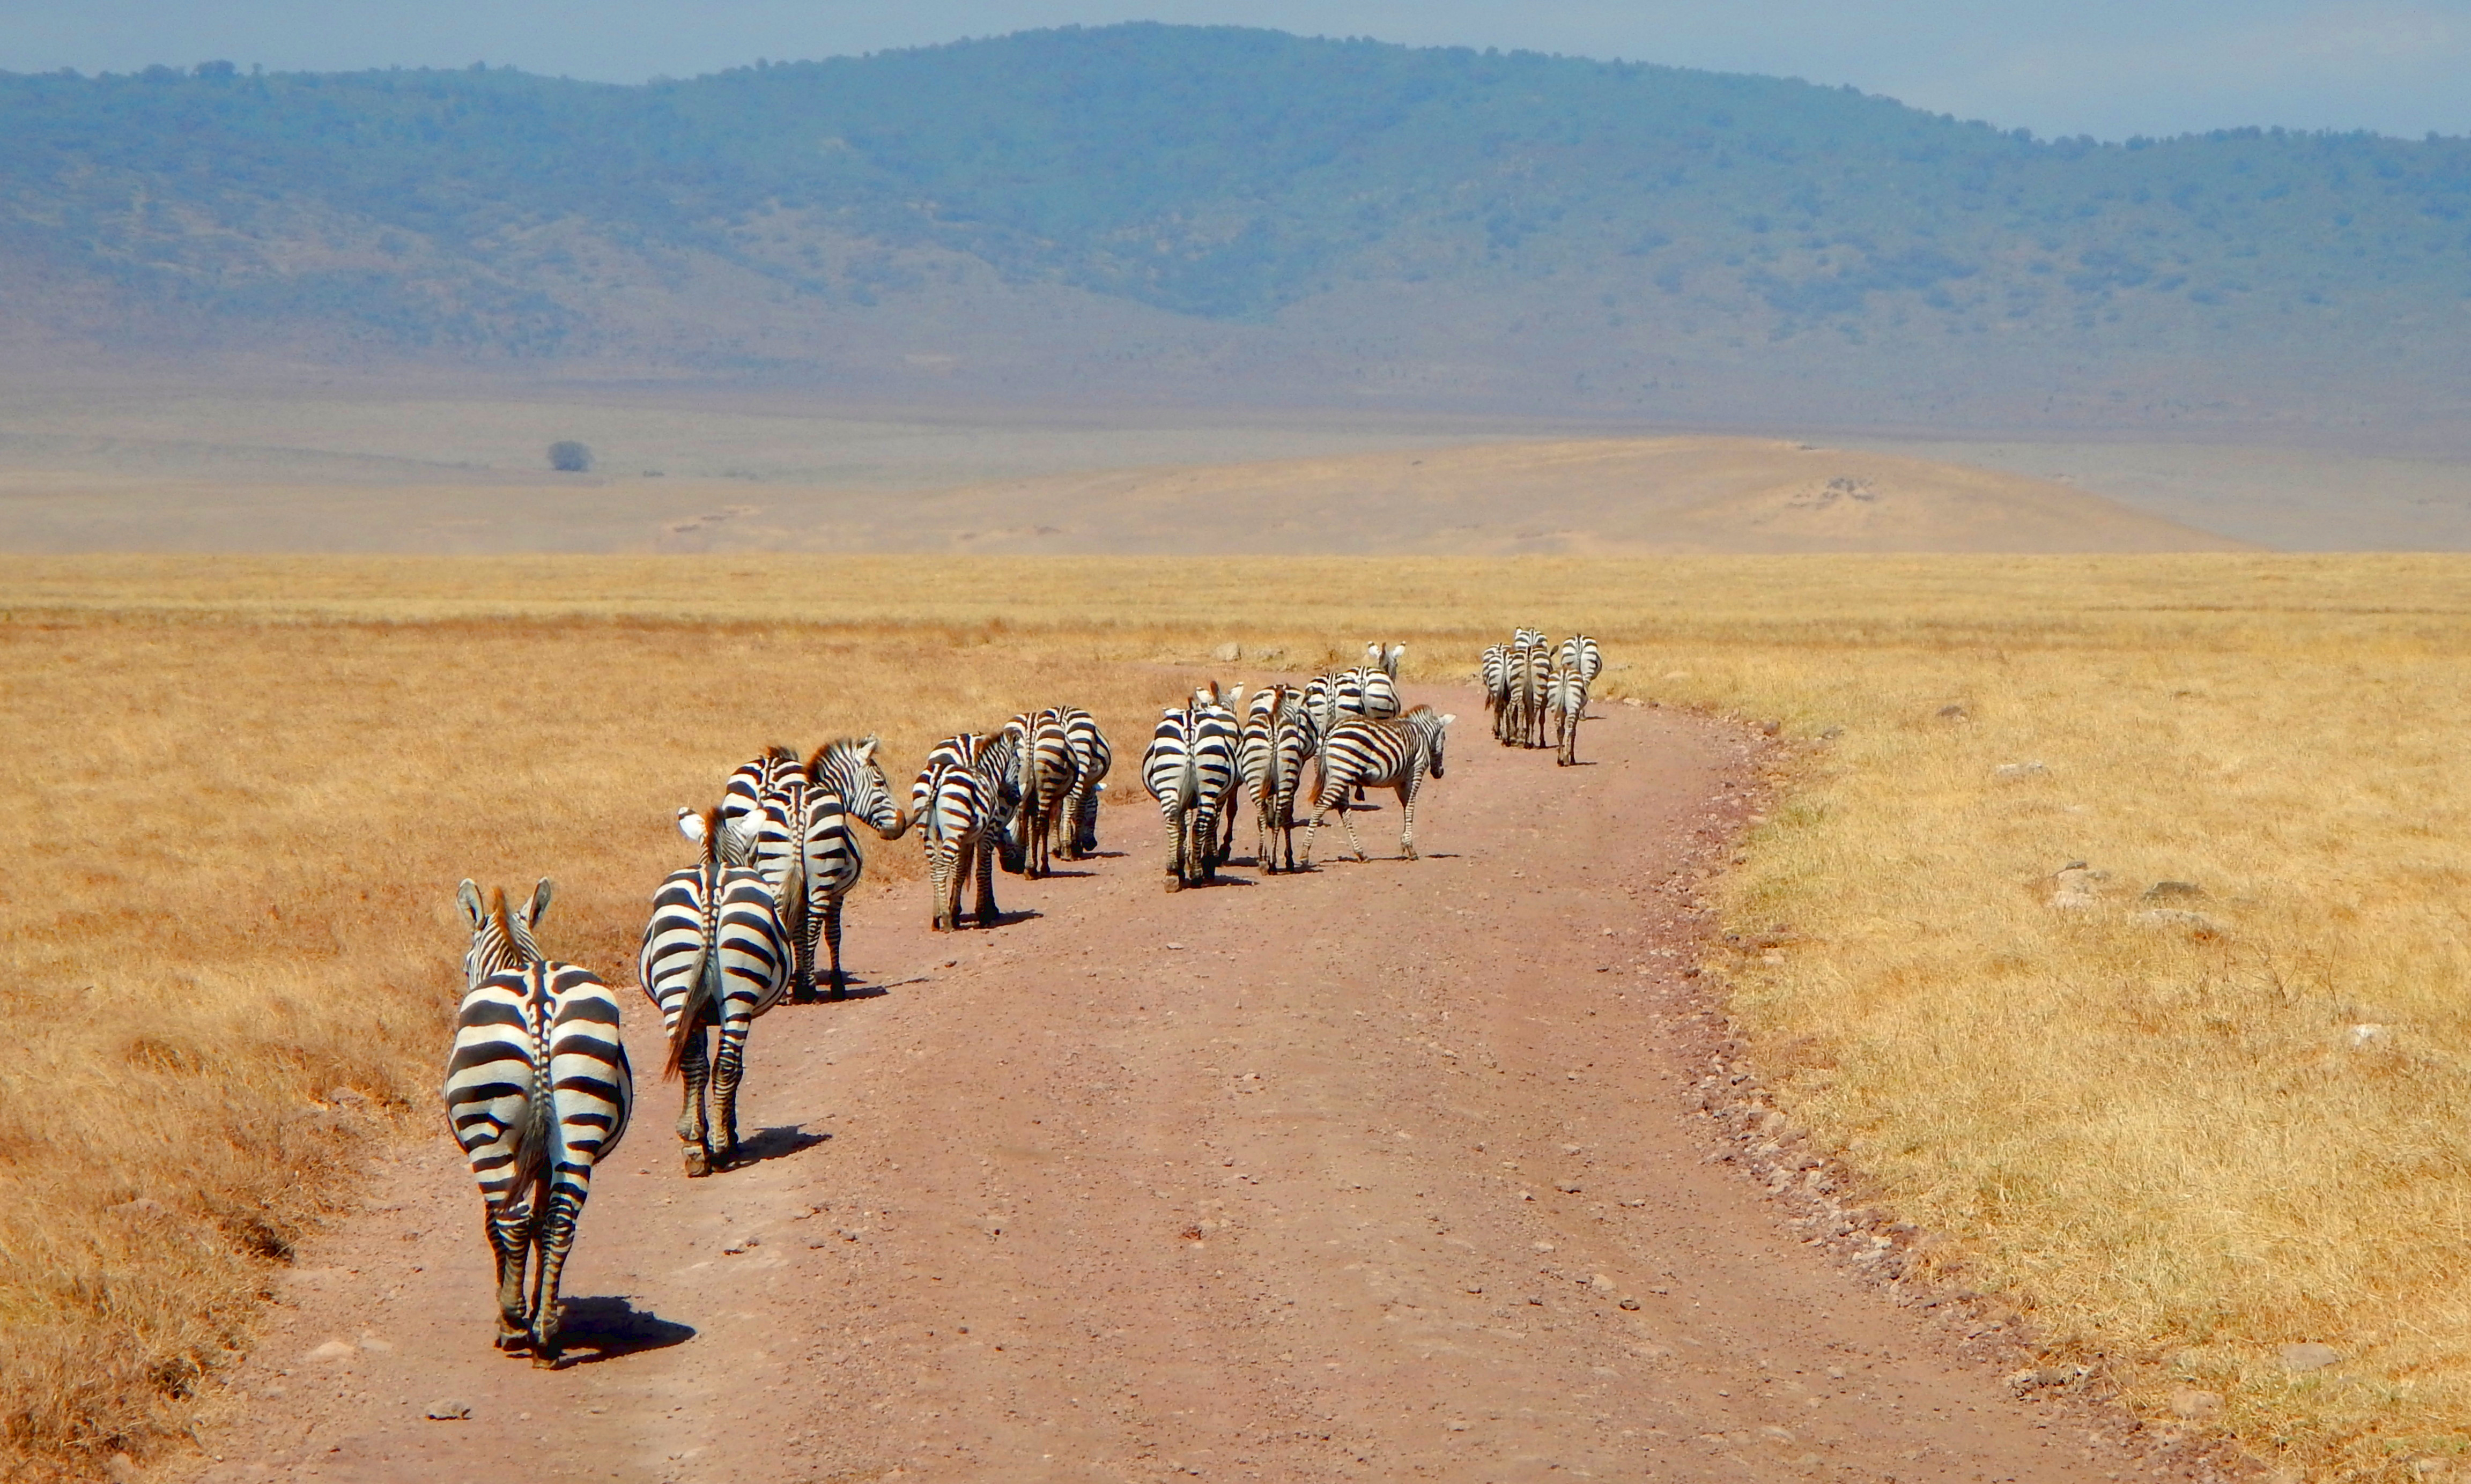 Zebras walking away on a long road in Ngorongoro crater